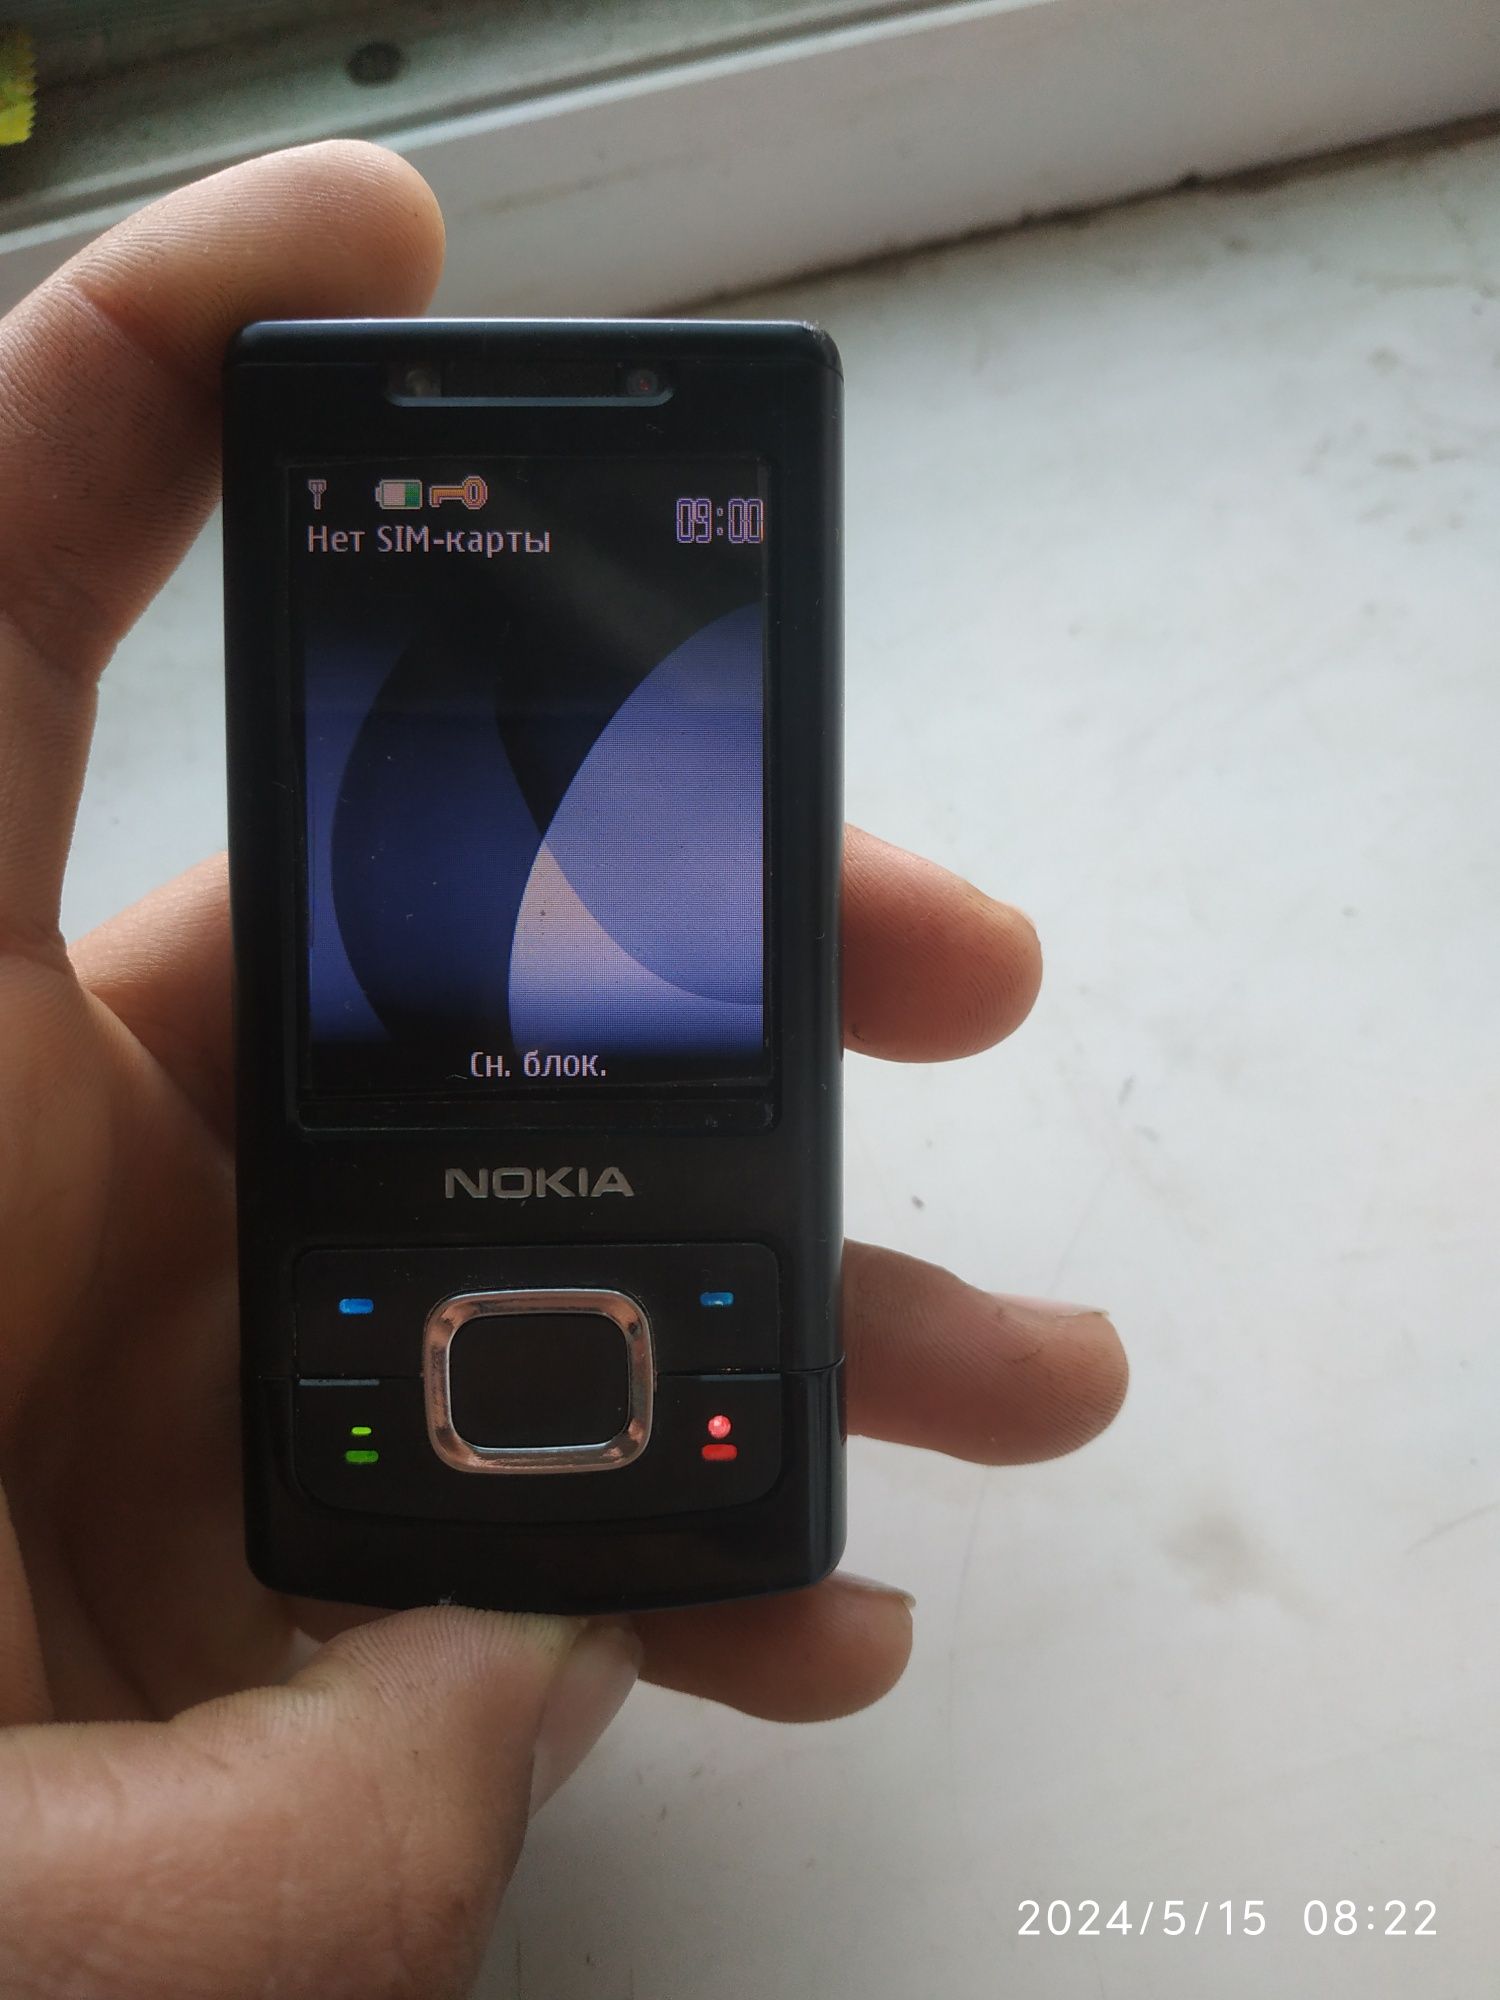 Nokia 6500 слайд  нокиа 6500 slayd